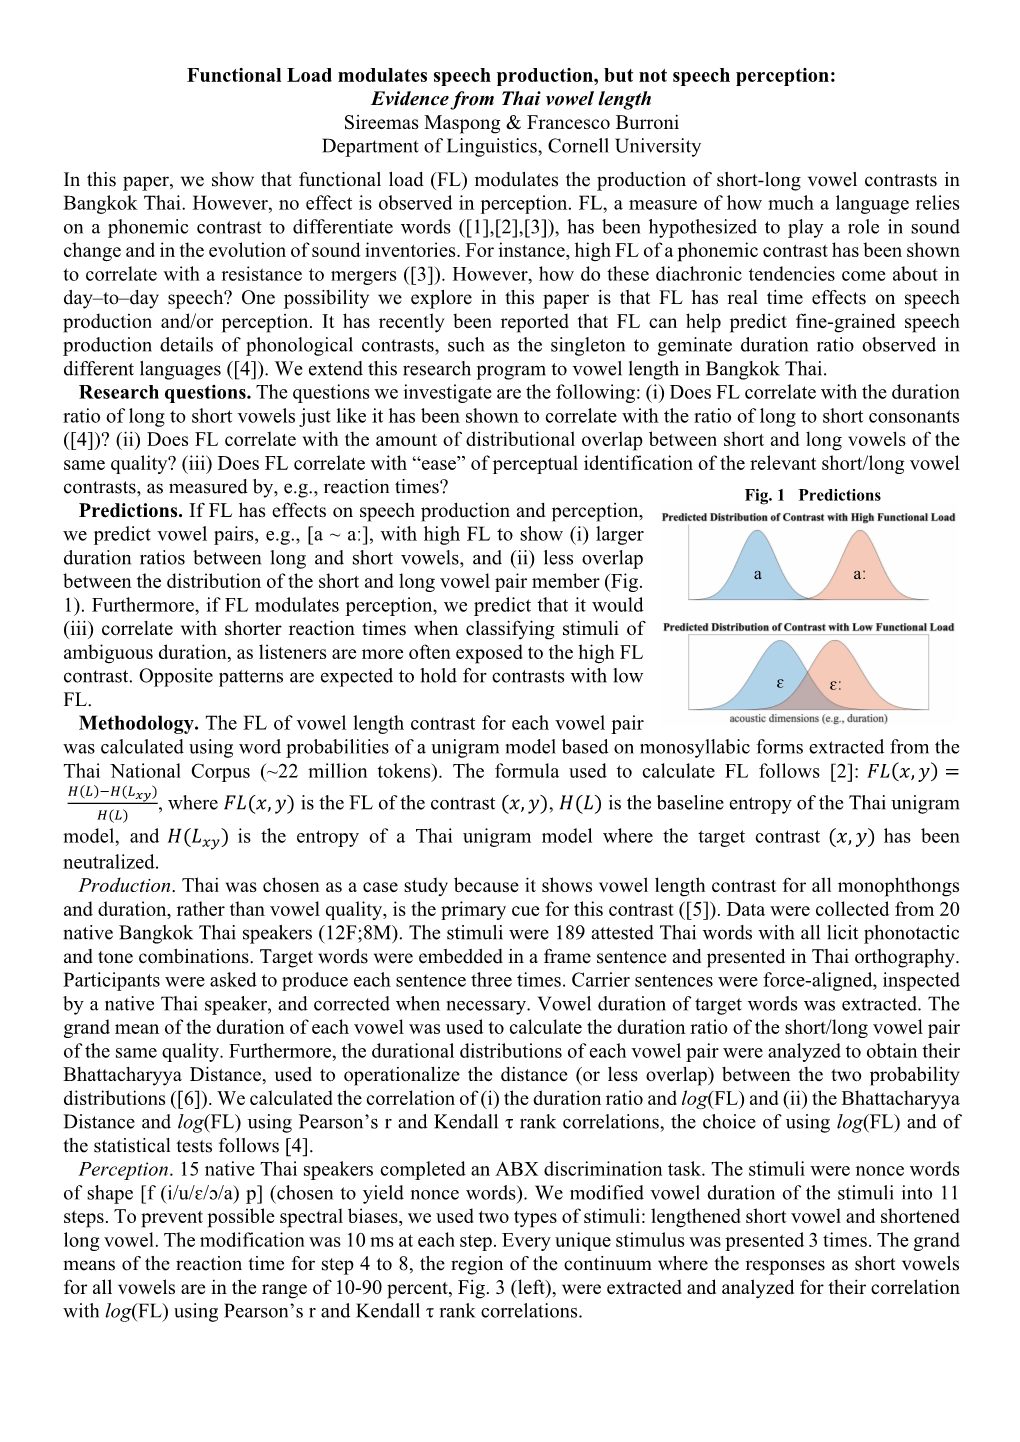 Evidence from Thai Vowel Length Sireemas Maspong & Francesco Burroni Department of Linguistics, Cornell University